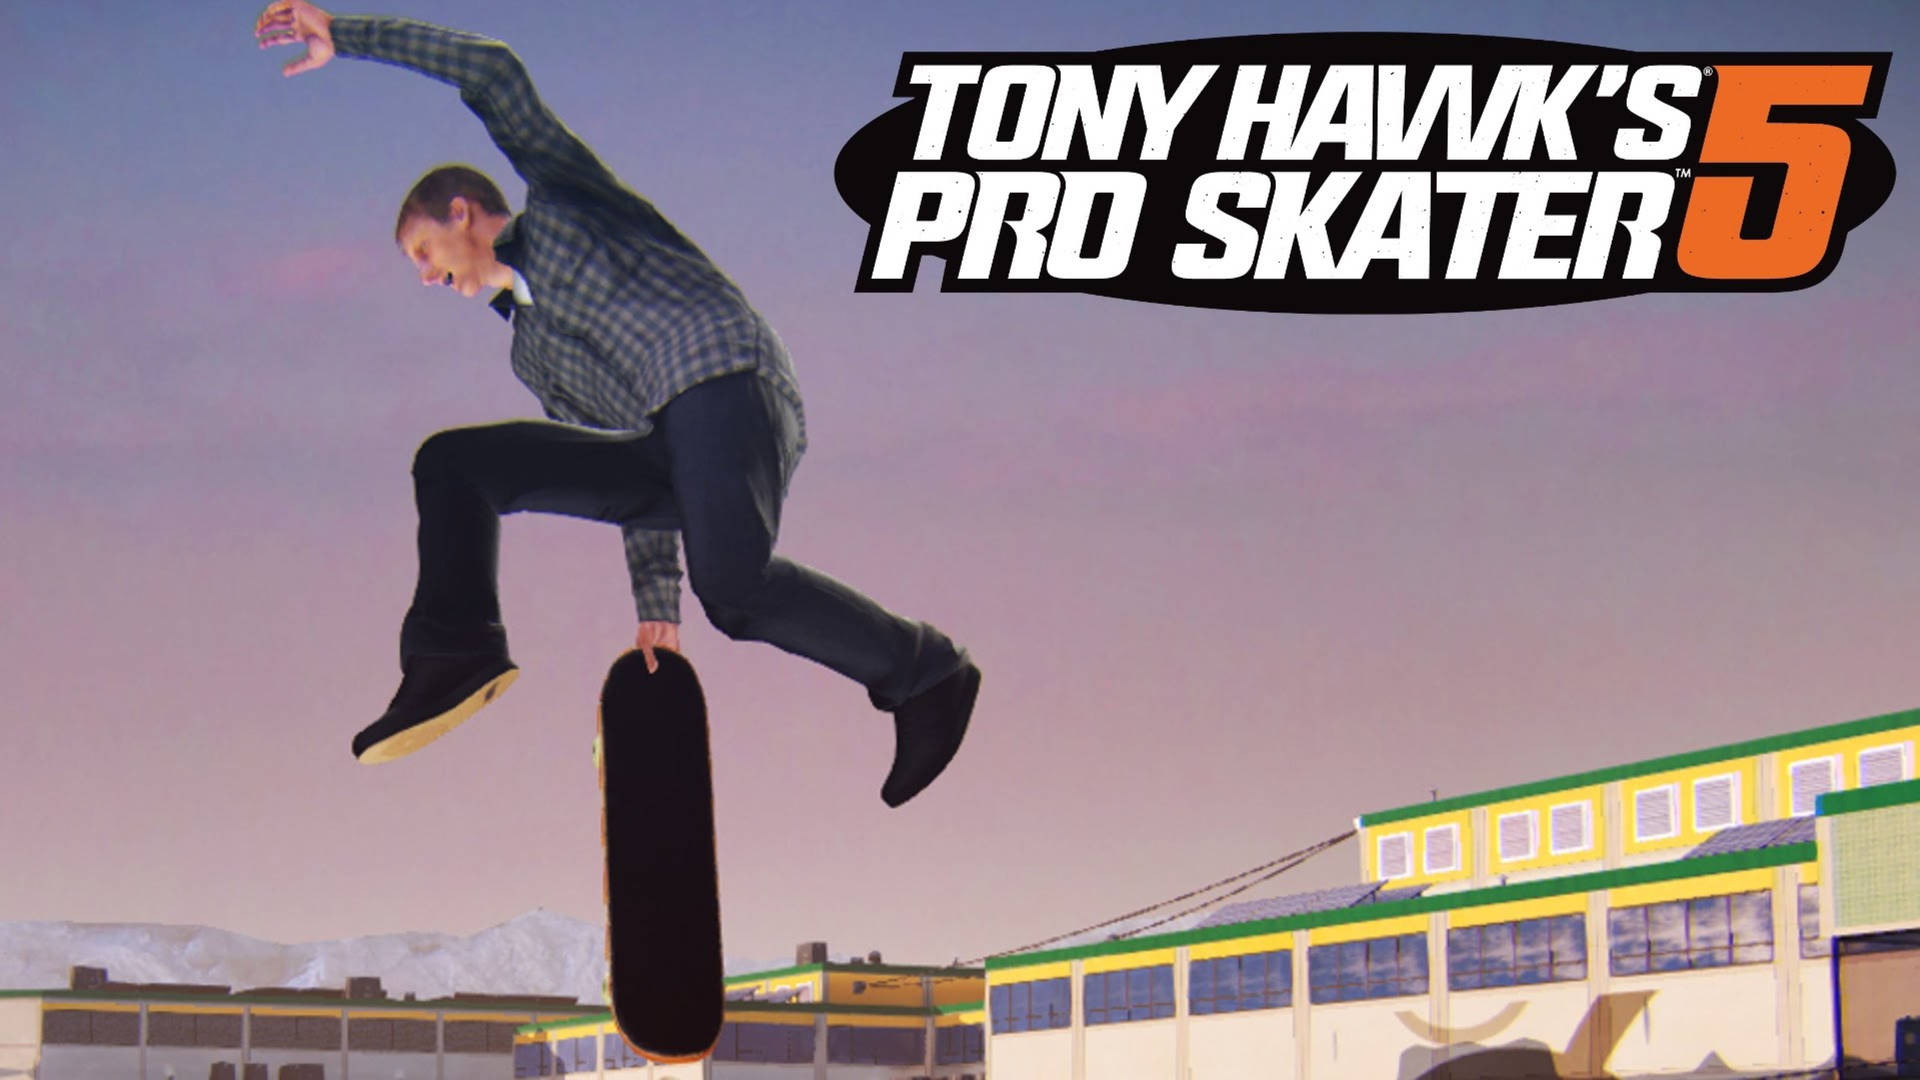 Tony Hawk Profi-skater-stuntsprung Wallpaper